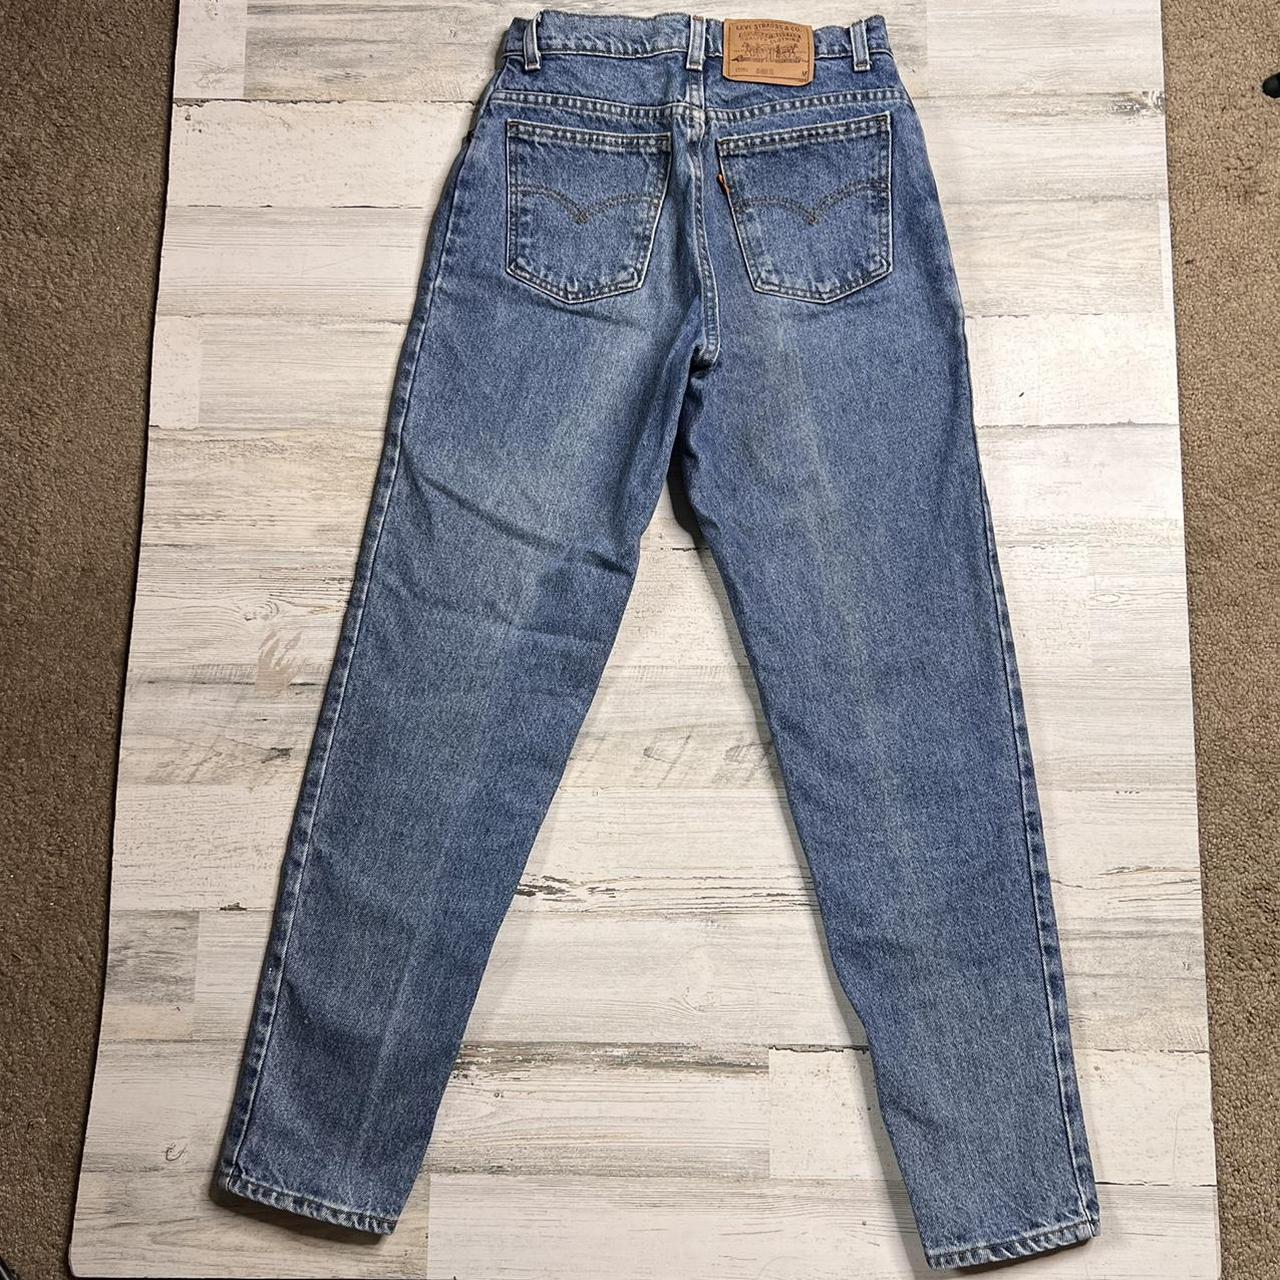 Vintage 1990’s 15951 Levi’s Jeans. Tag reads “8... - Depop